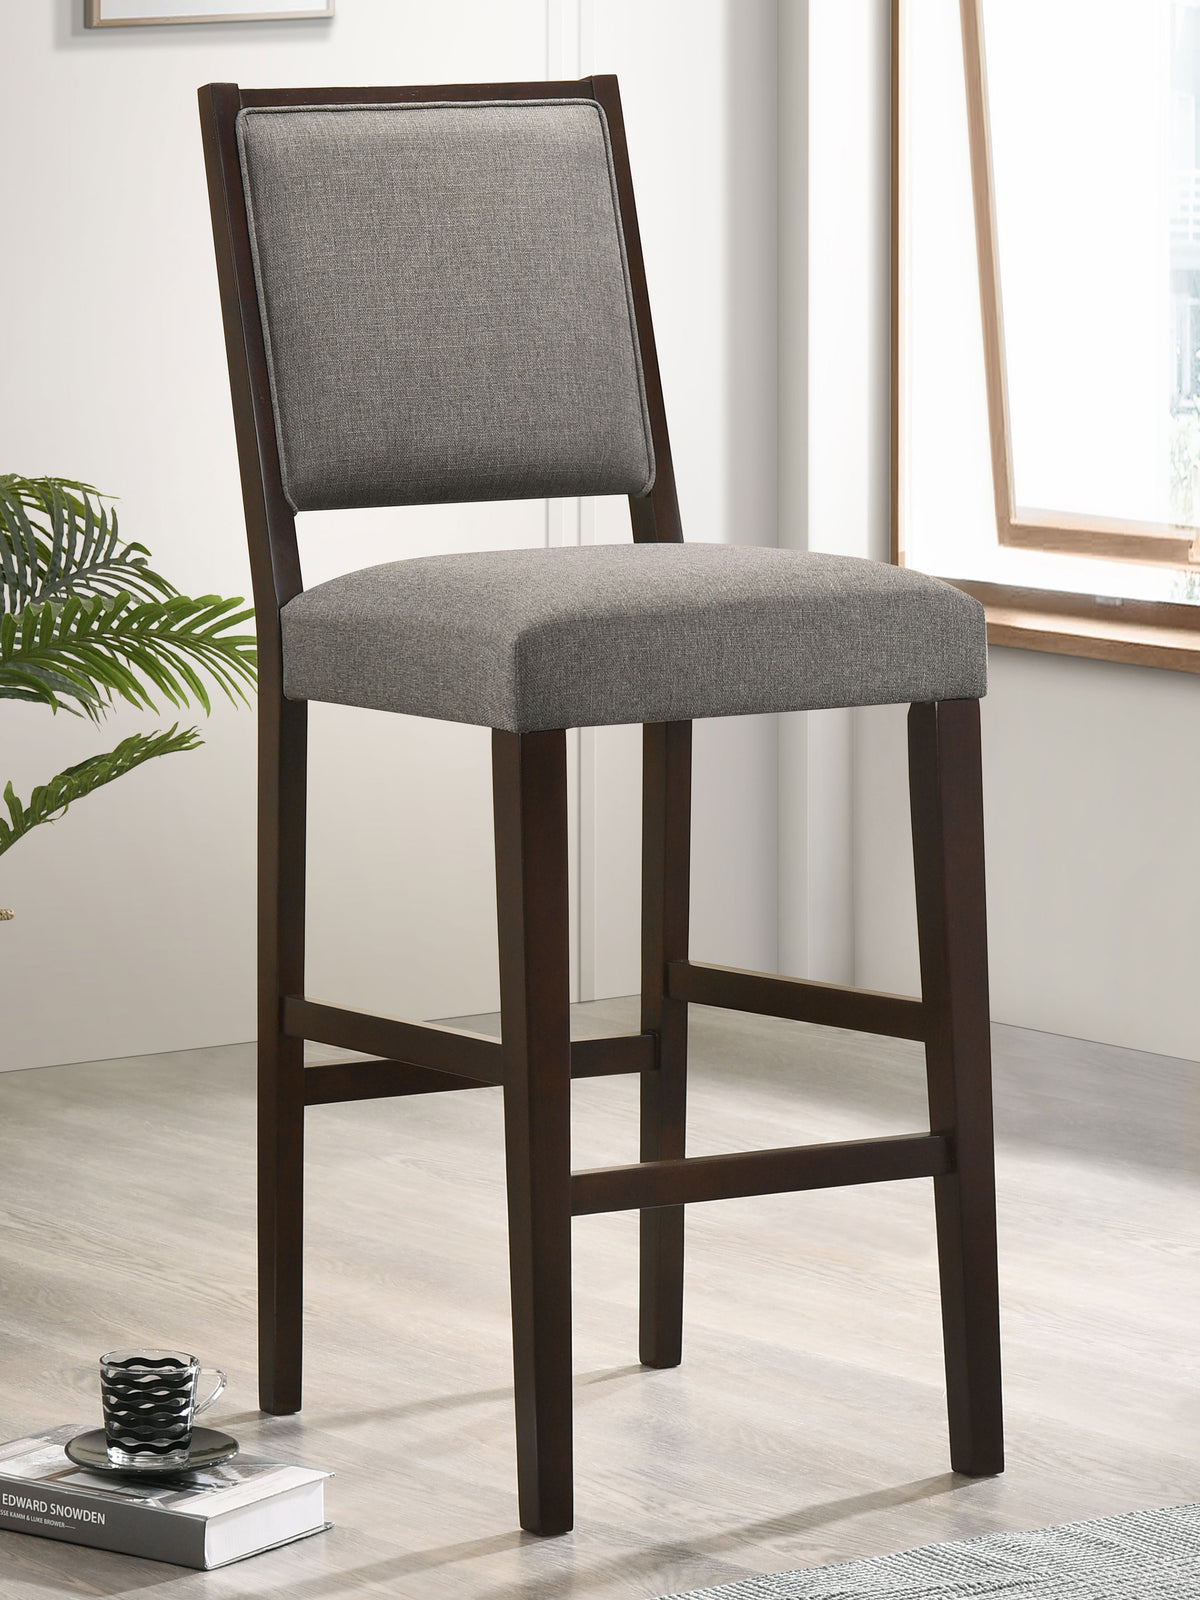 Bedford Upholstered Open Back Bar Stools with Footrest (Set of 2) Grey and Espresso  Half Price Furniture